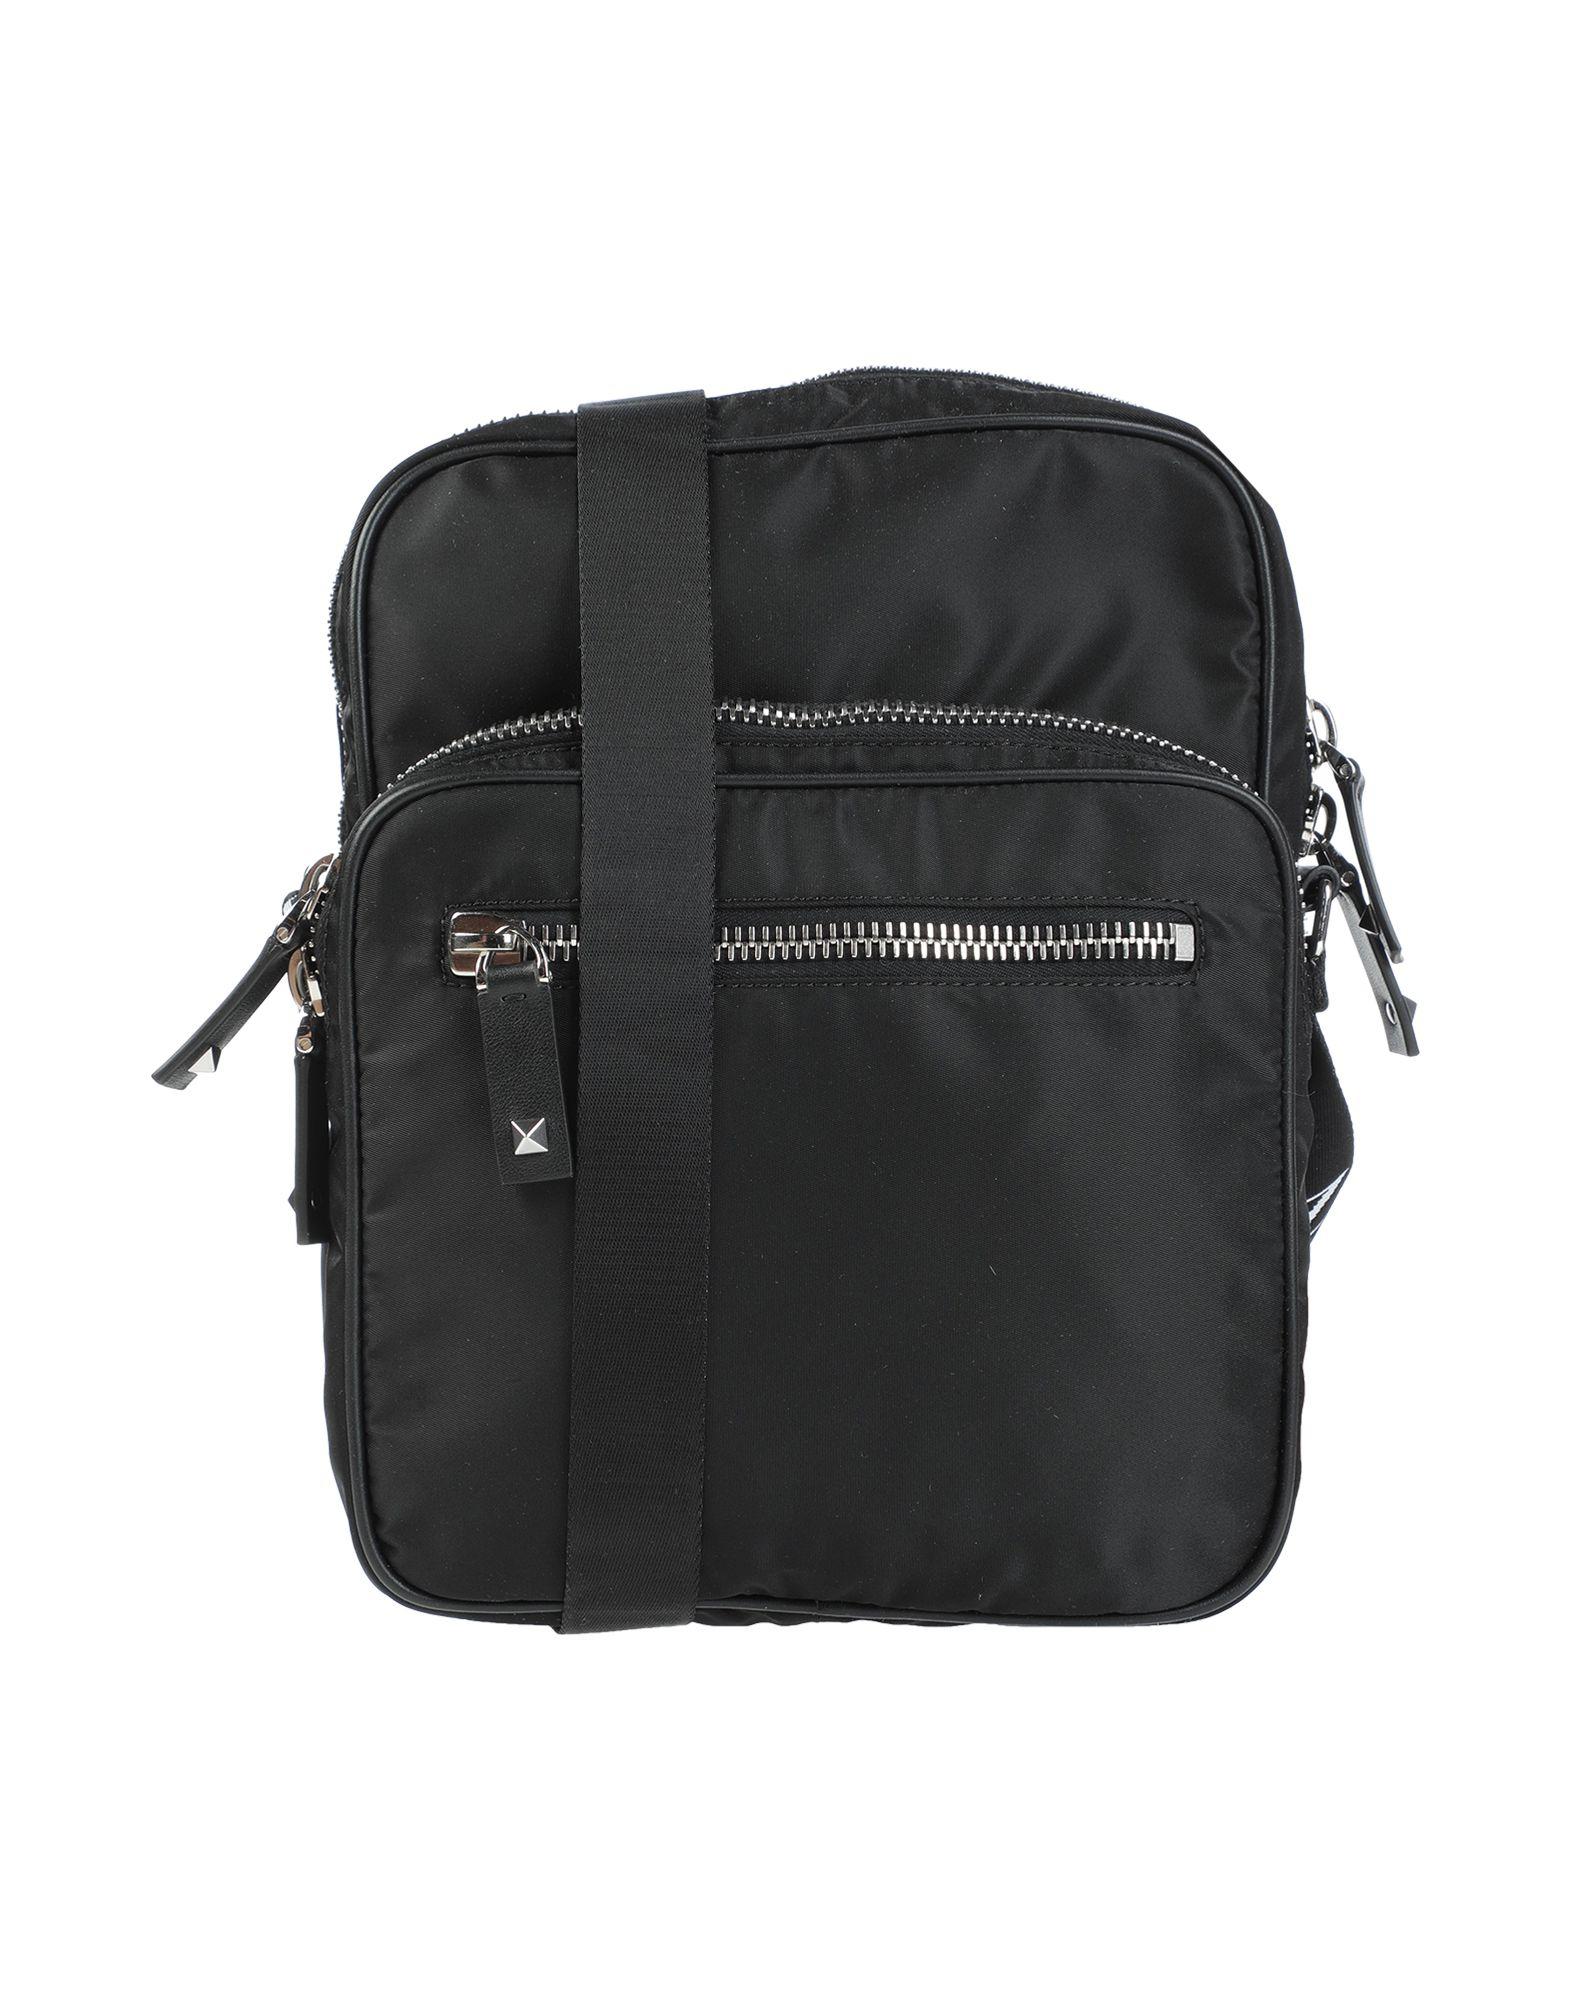 Valentino Garavani Leather Cross-body Bag in Black for Men - Lyst